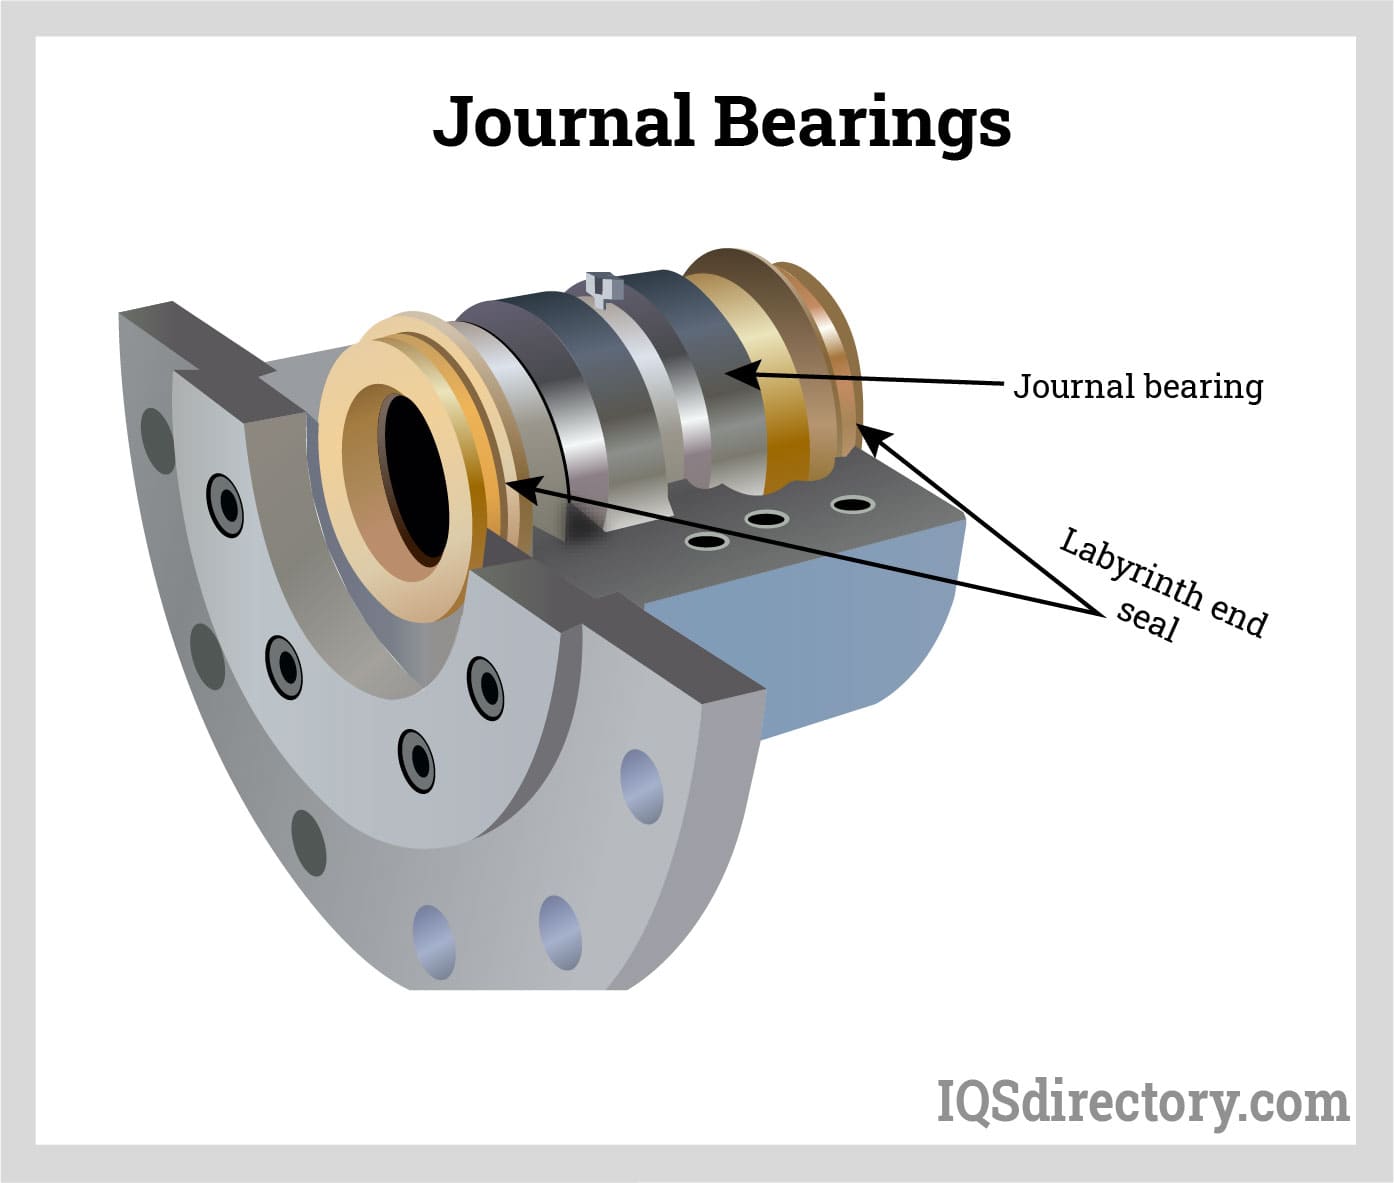 Journal Bearings